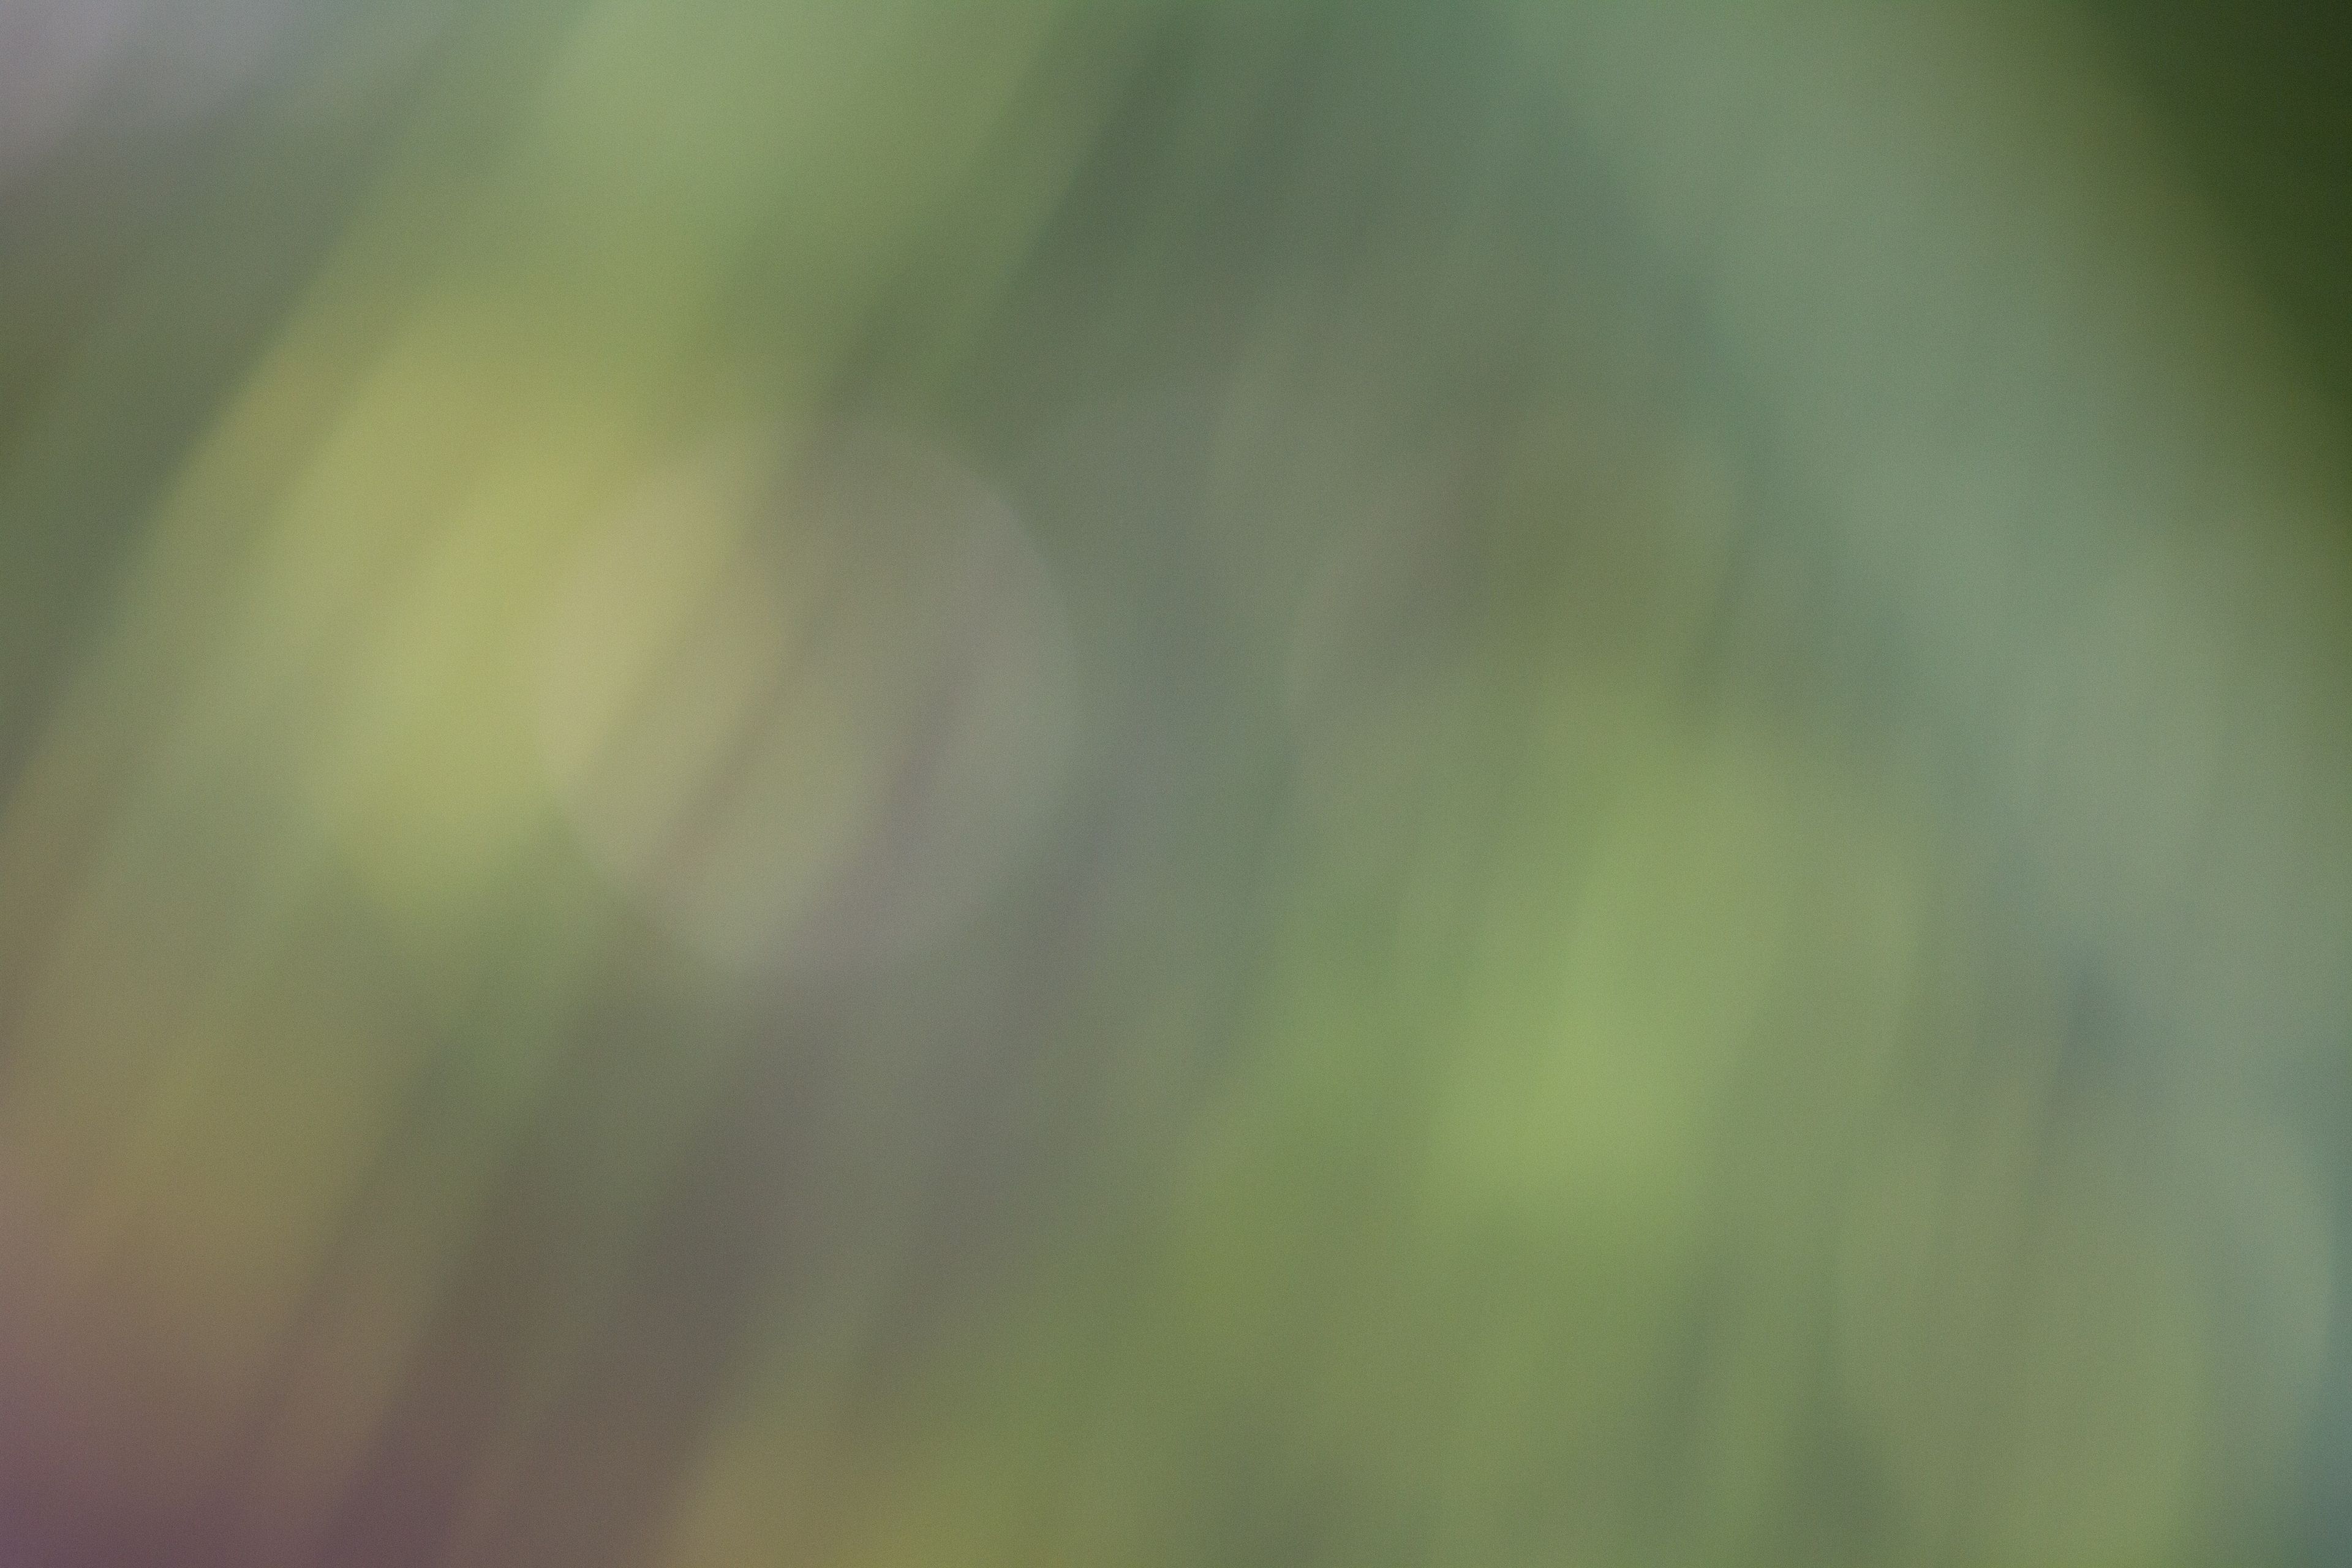 A green blurred background.